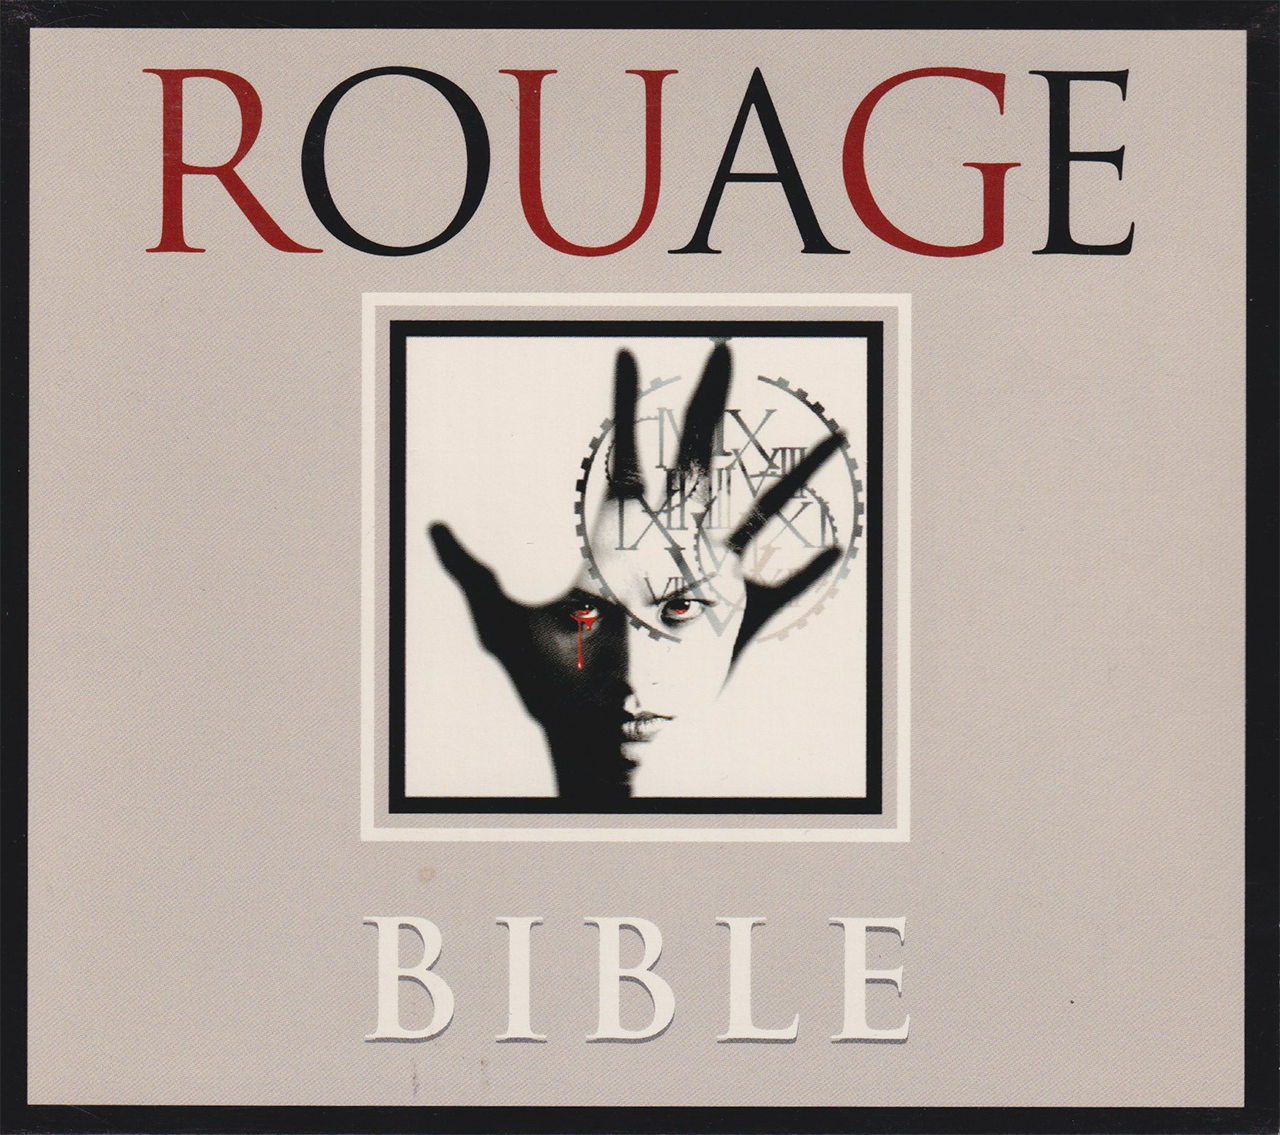 BIBLE / ROUAGE